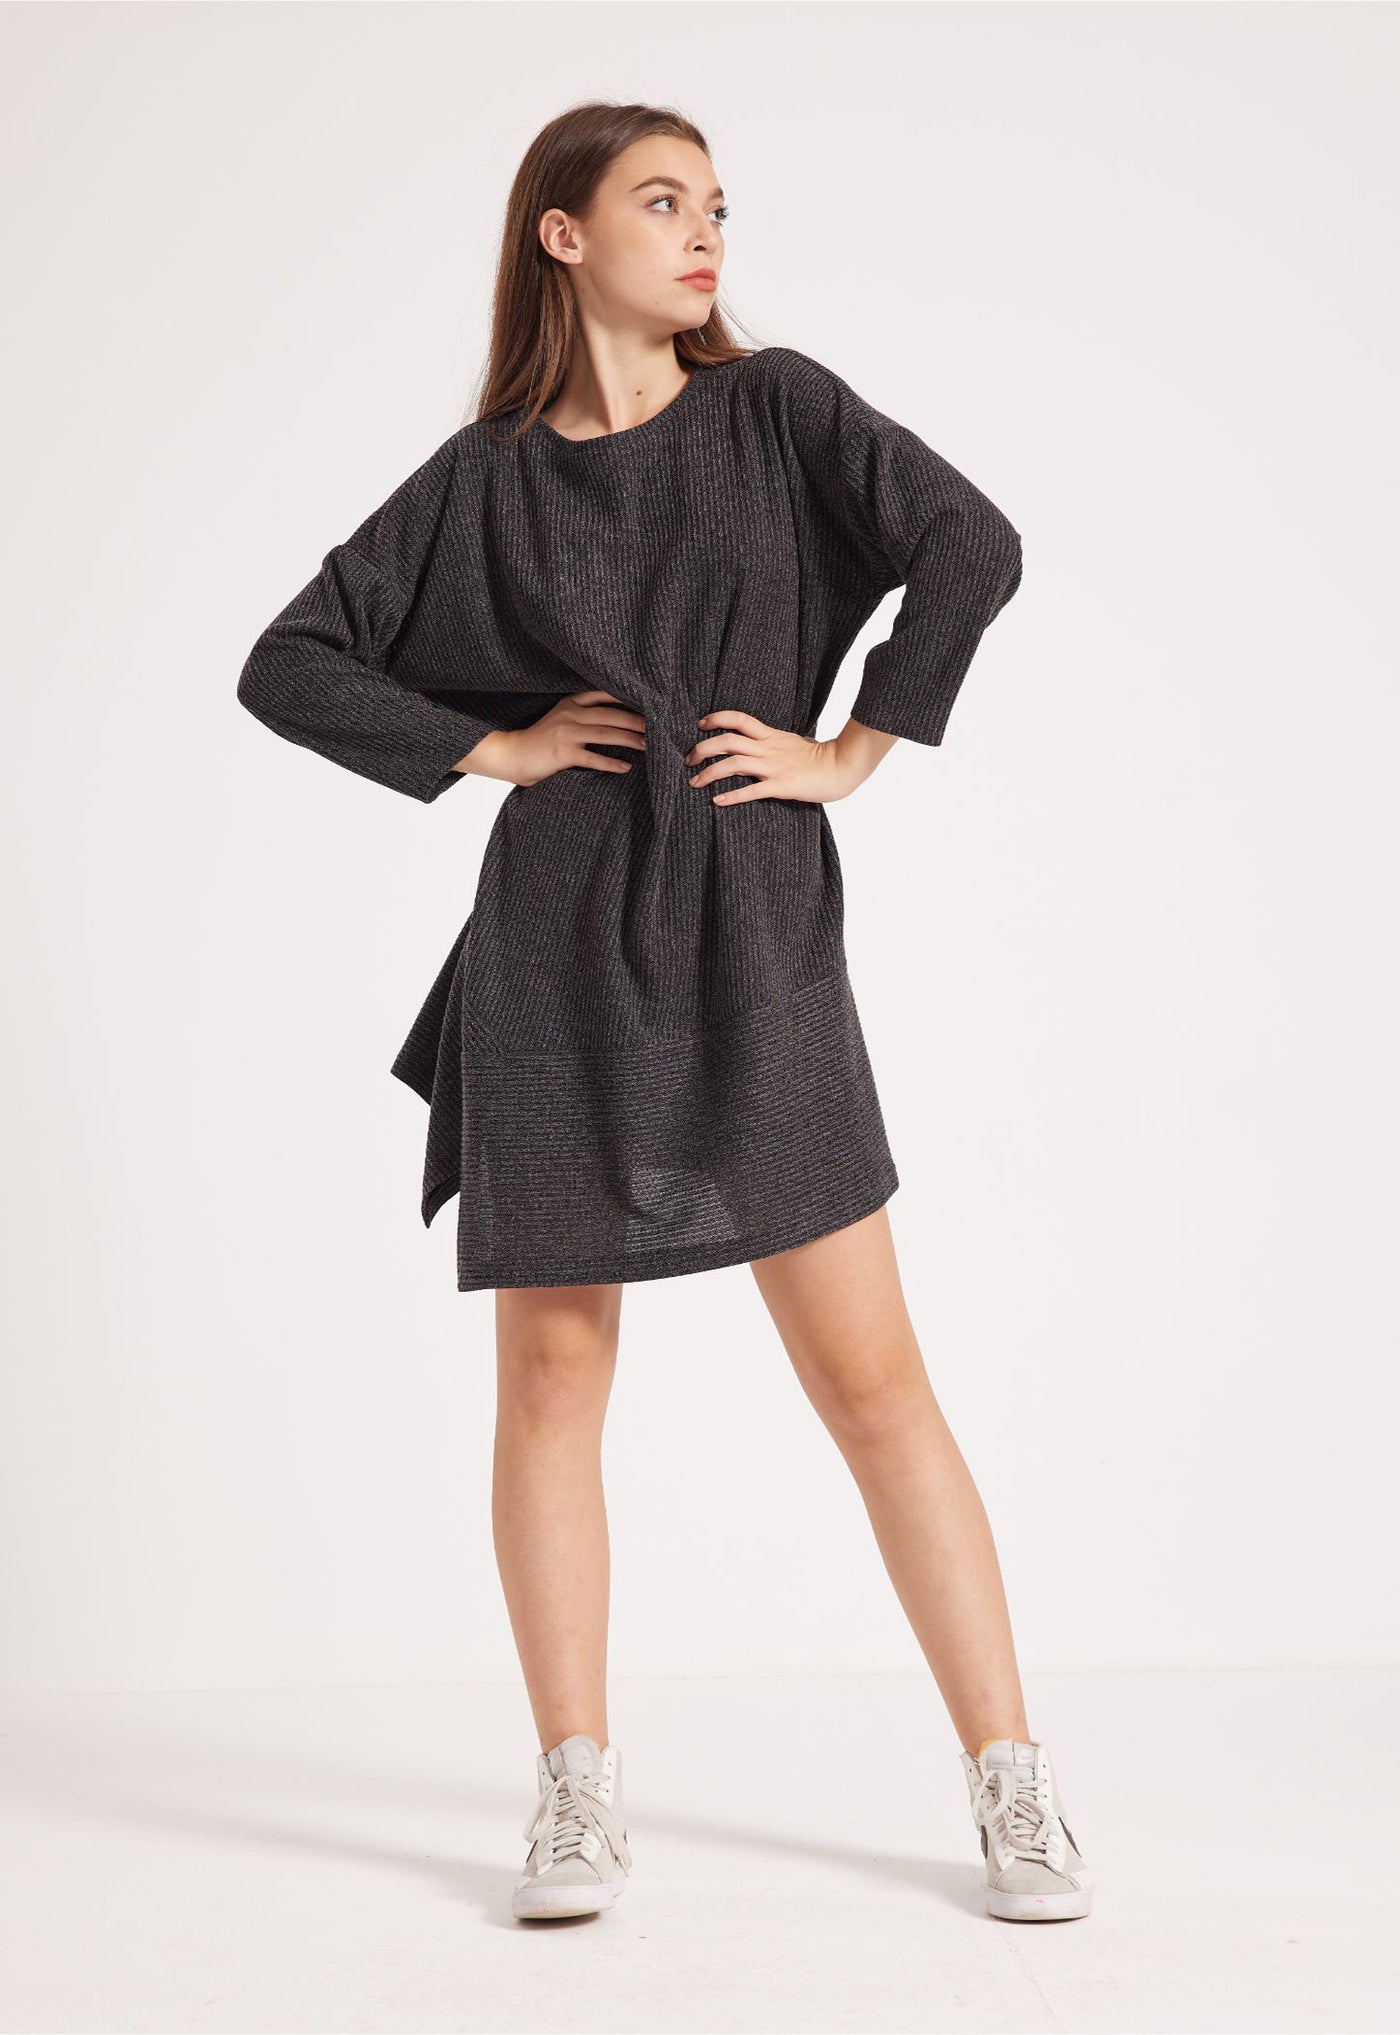 Knitted Dress - Ribbed Design - Asymmetric Hem